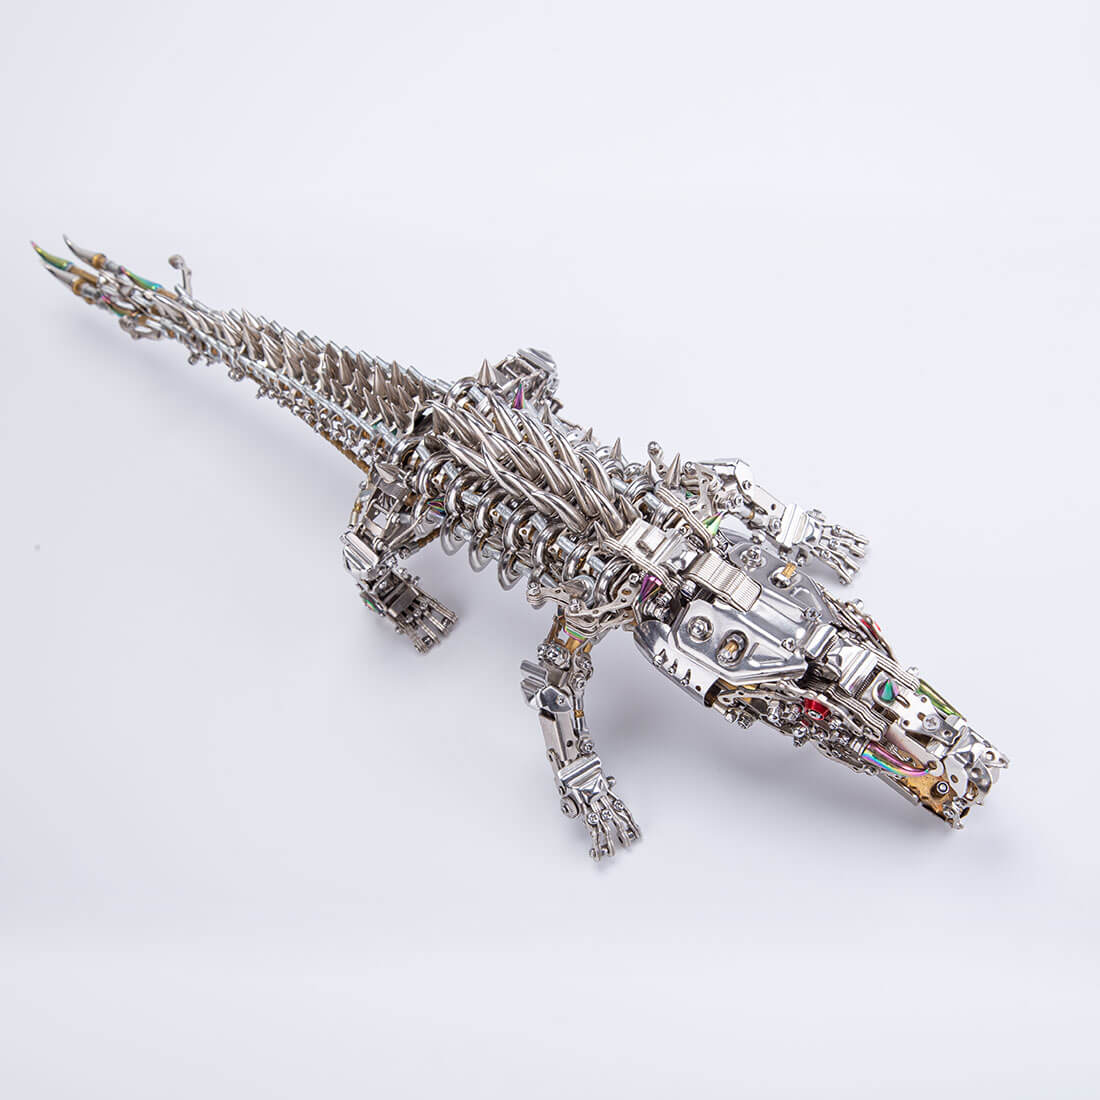 Crocodile 3D DIY Mechanical Metal Assembly Model (1500+PCS)